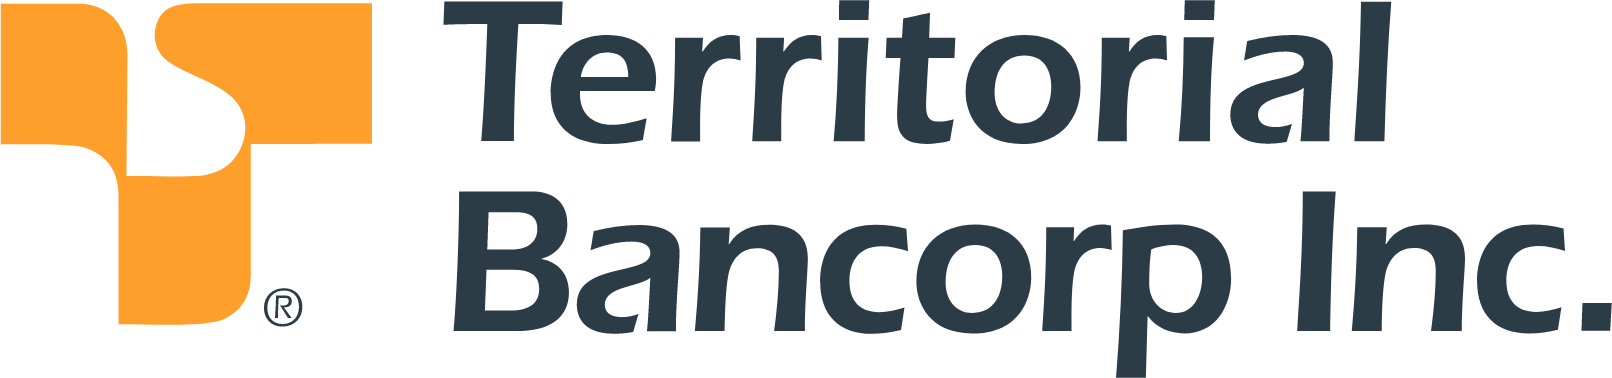 Territorial Bancorp
 logo large (transparent PNG)